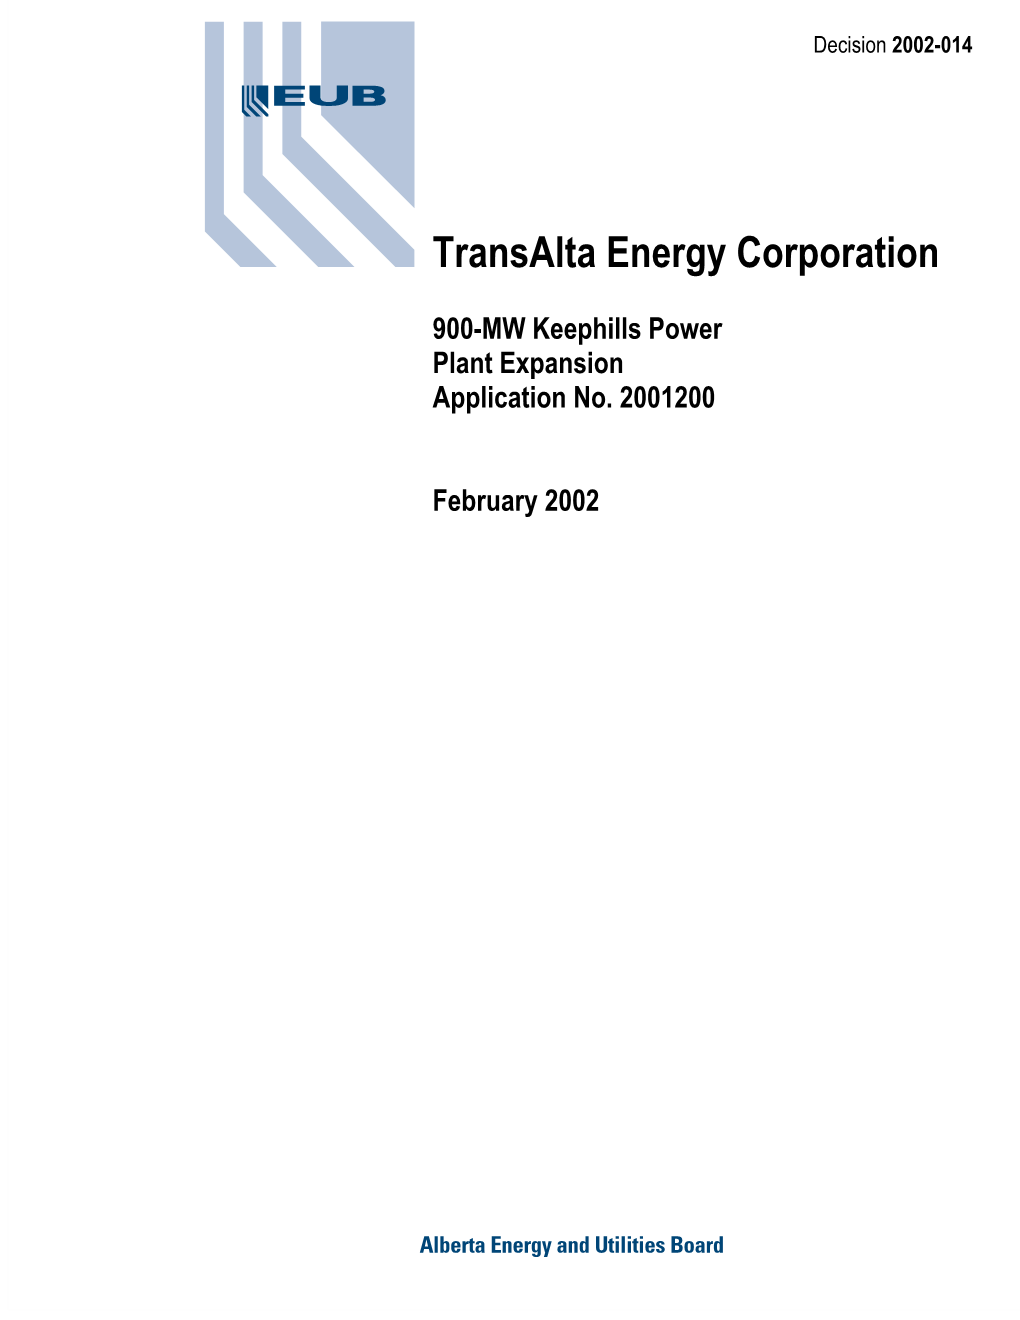 Transalta Energy Corporation